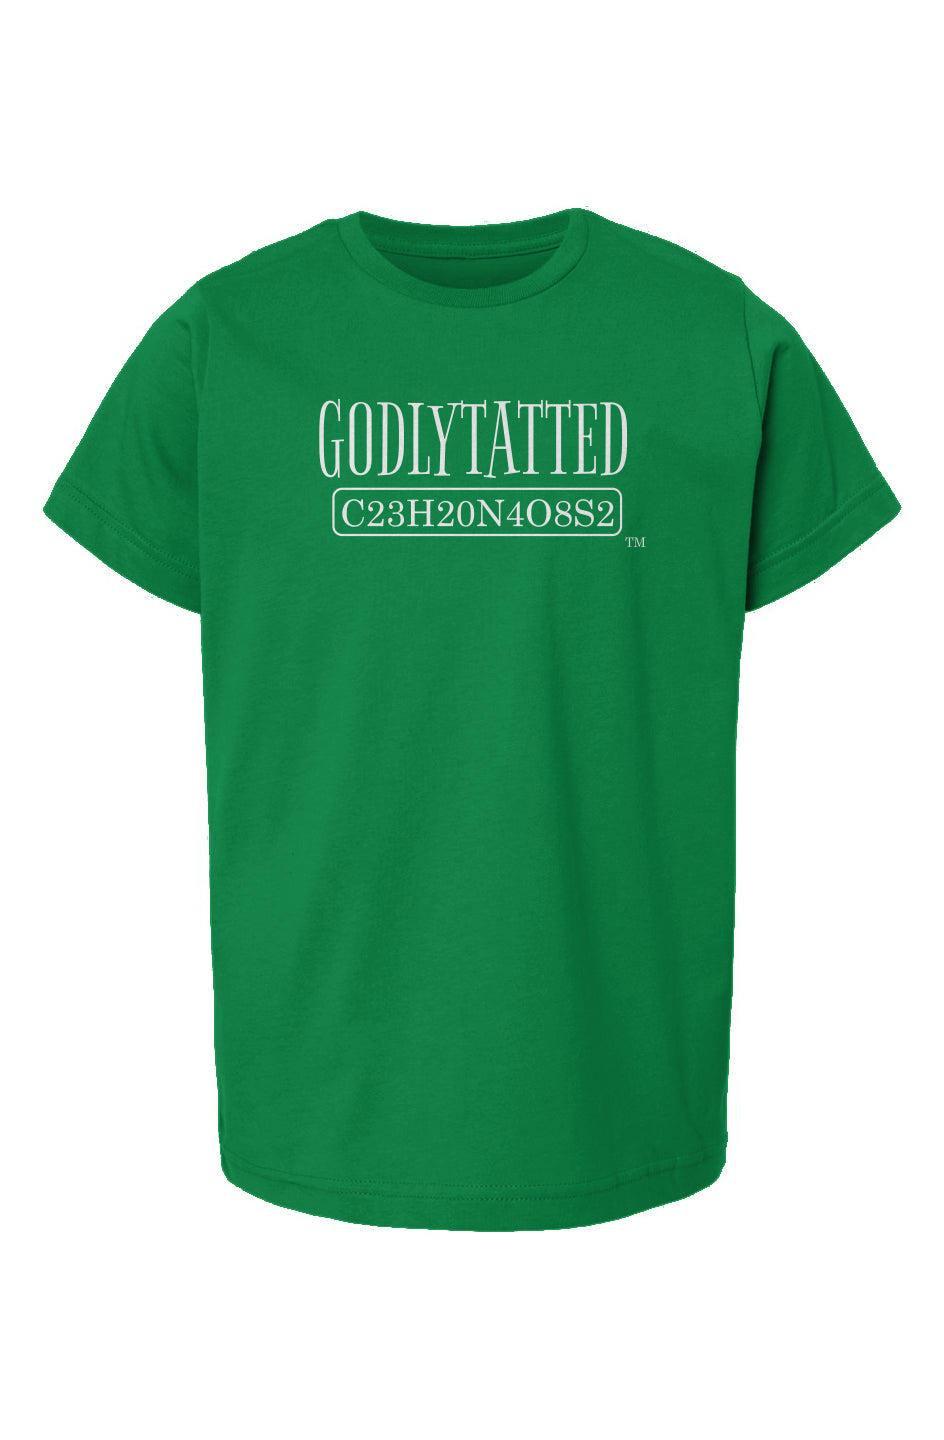 godlytatted - kids - Vintage Green - white logo